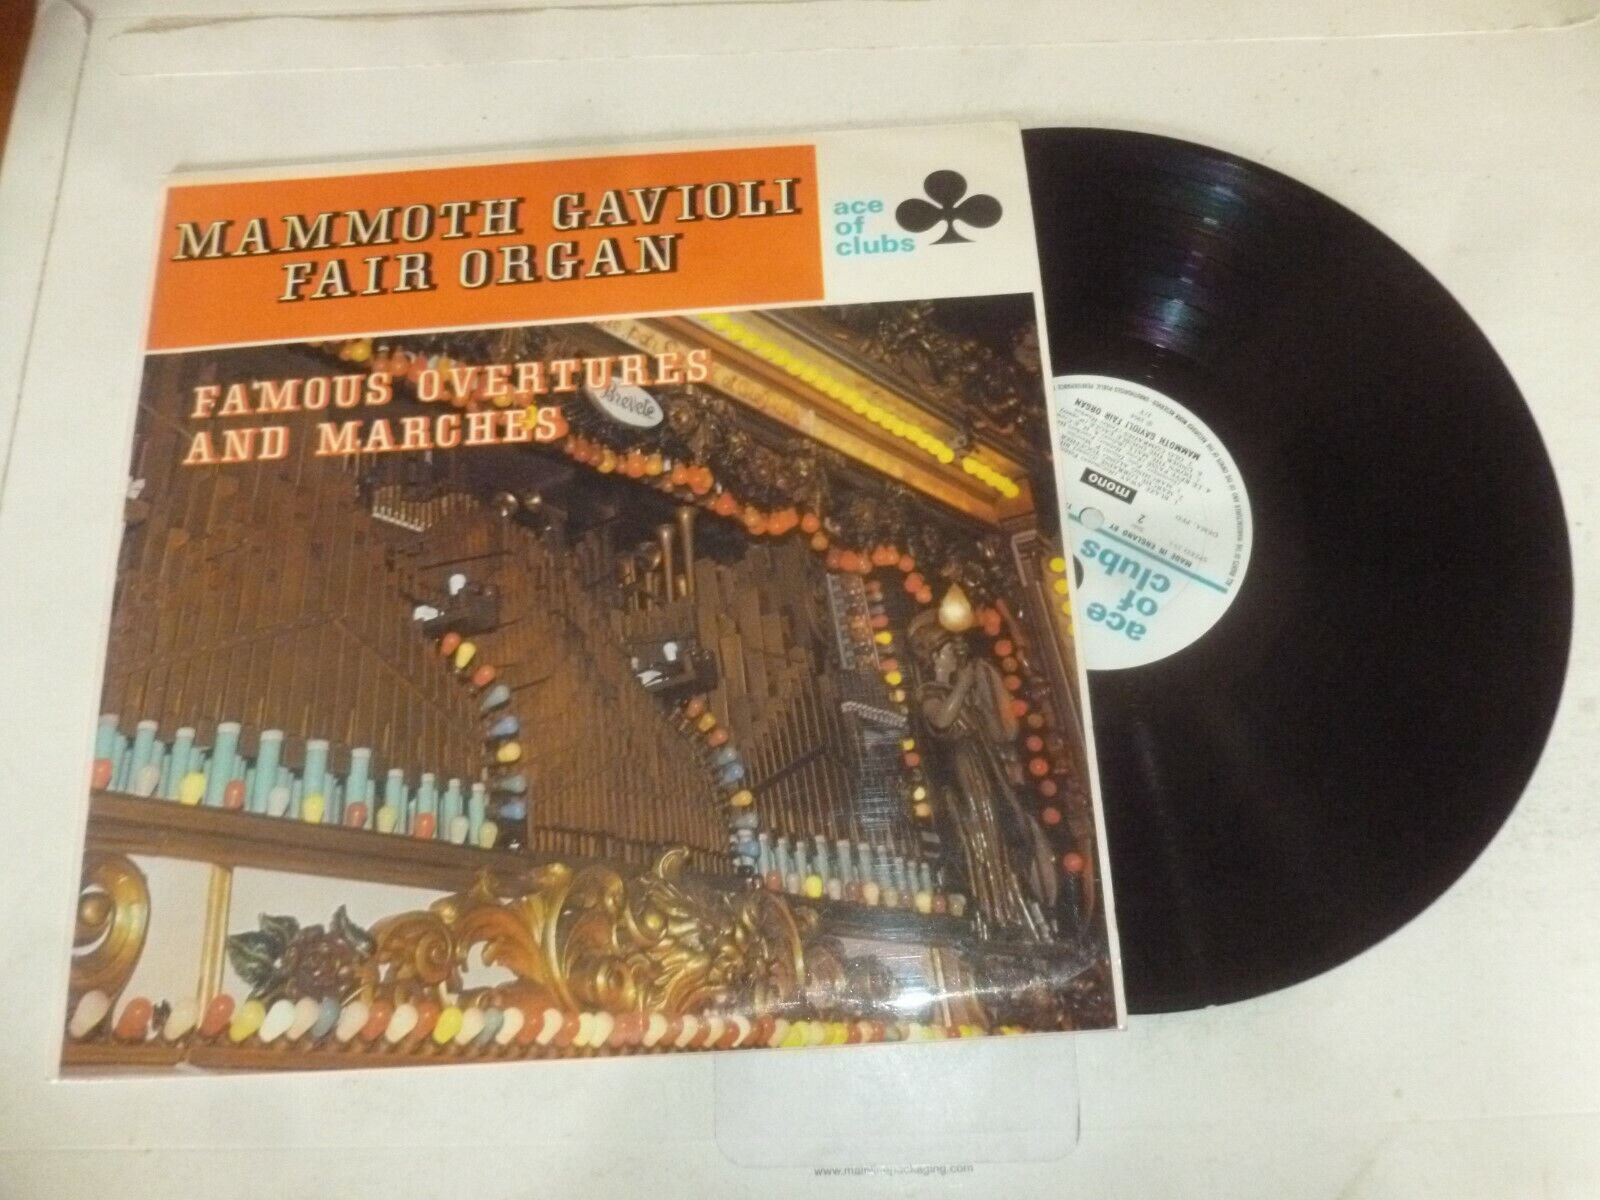 MAMMOTH GAVIOLI FAIR ORGAN - Famous Overtures & Marches - 1964 UK 10-track LP